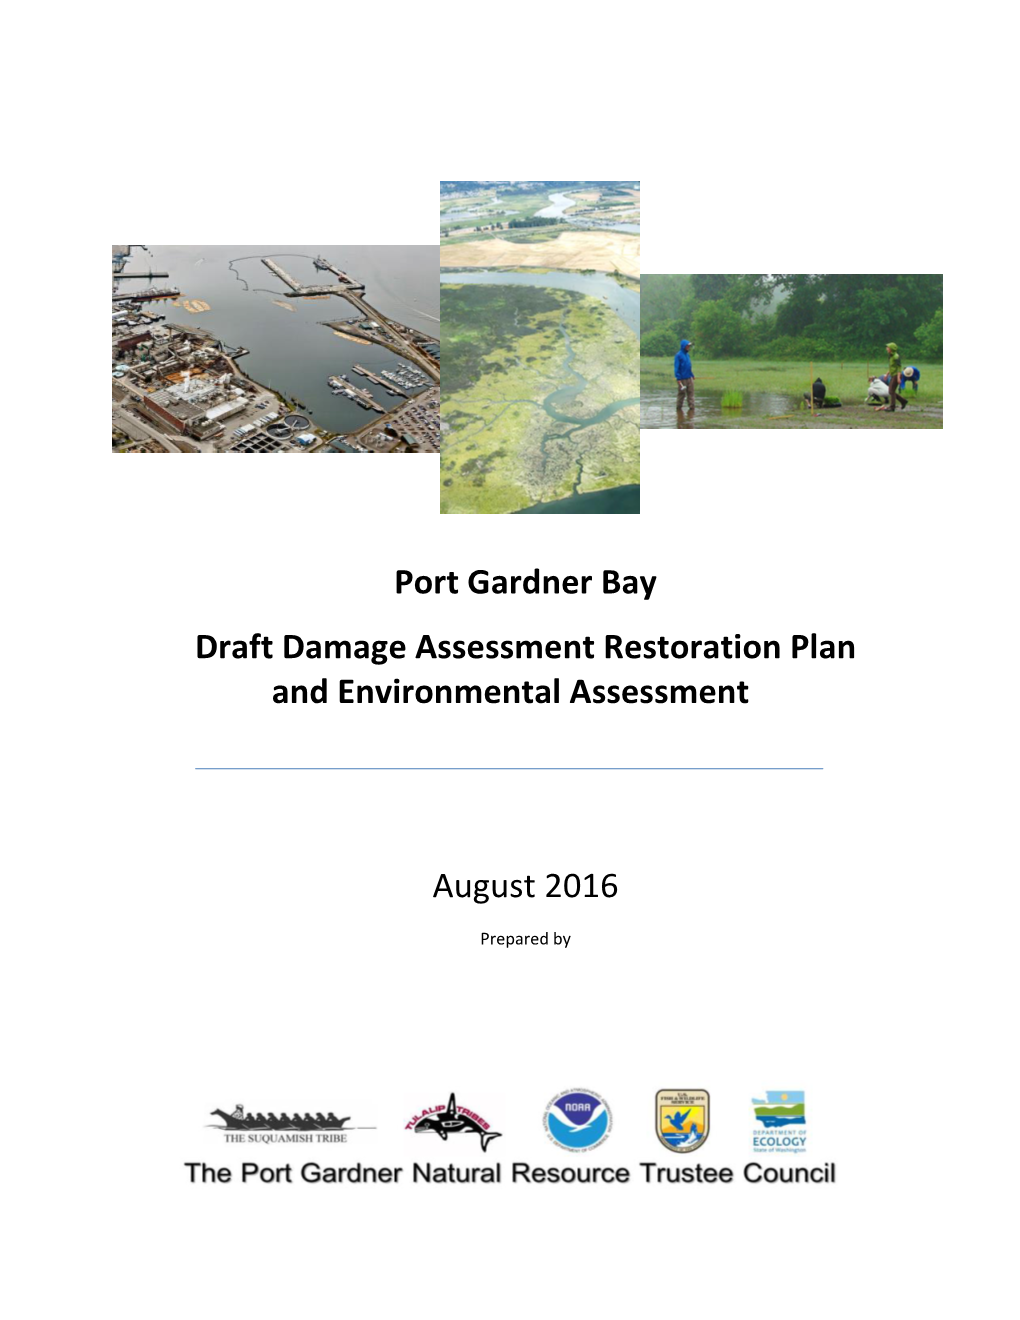 Draft Damage Assessment Restoration Plan and Environmental Assessment